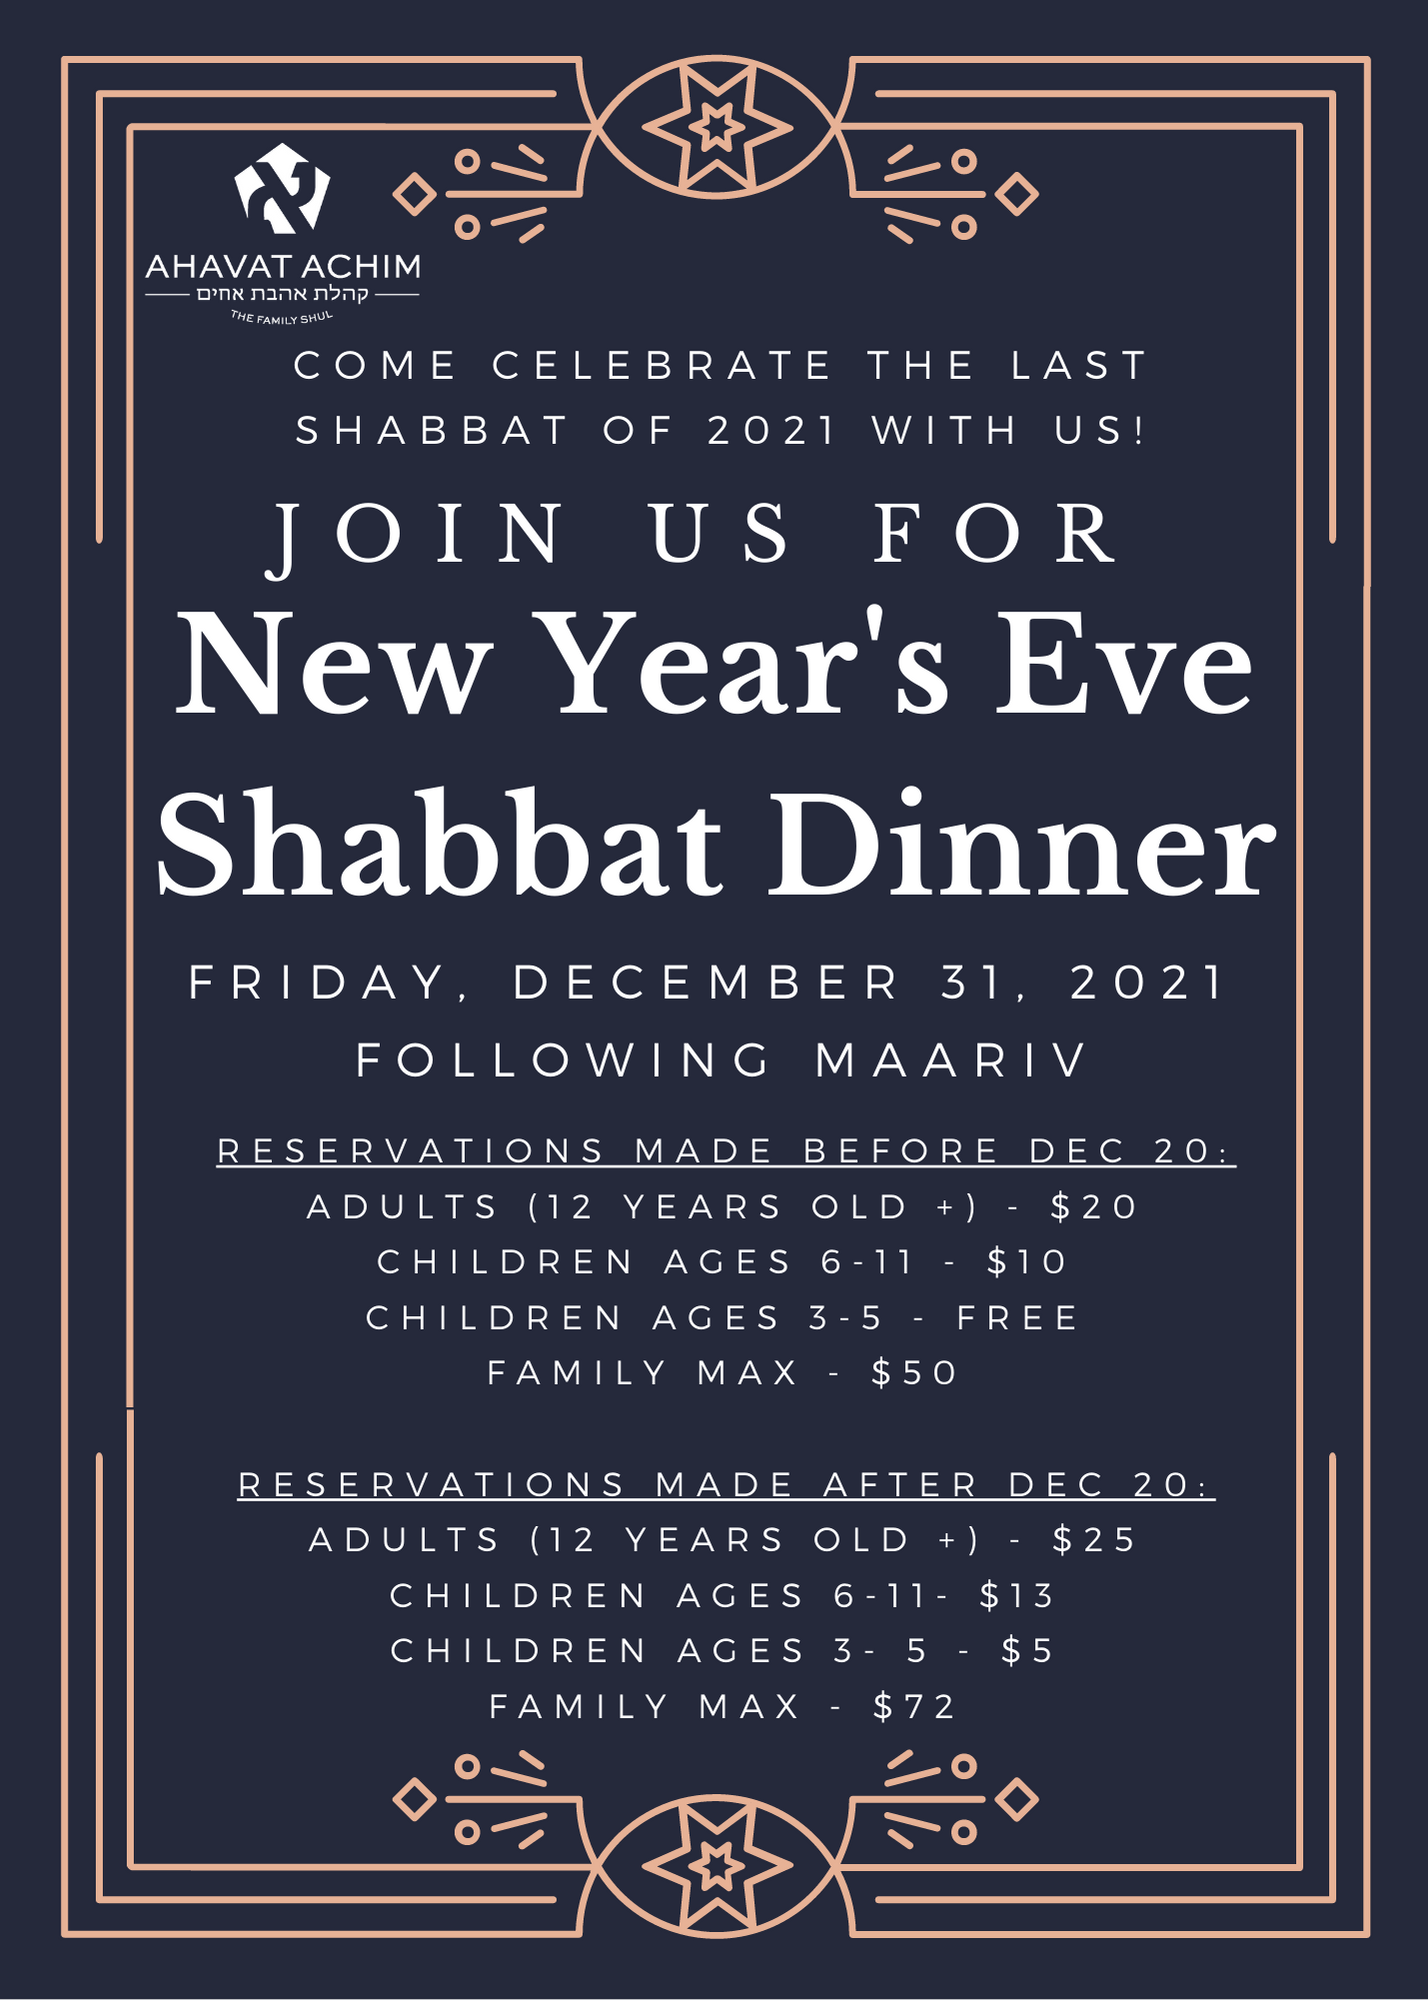 New Year's Eve Shabbat Dinner